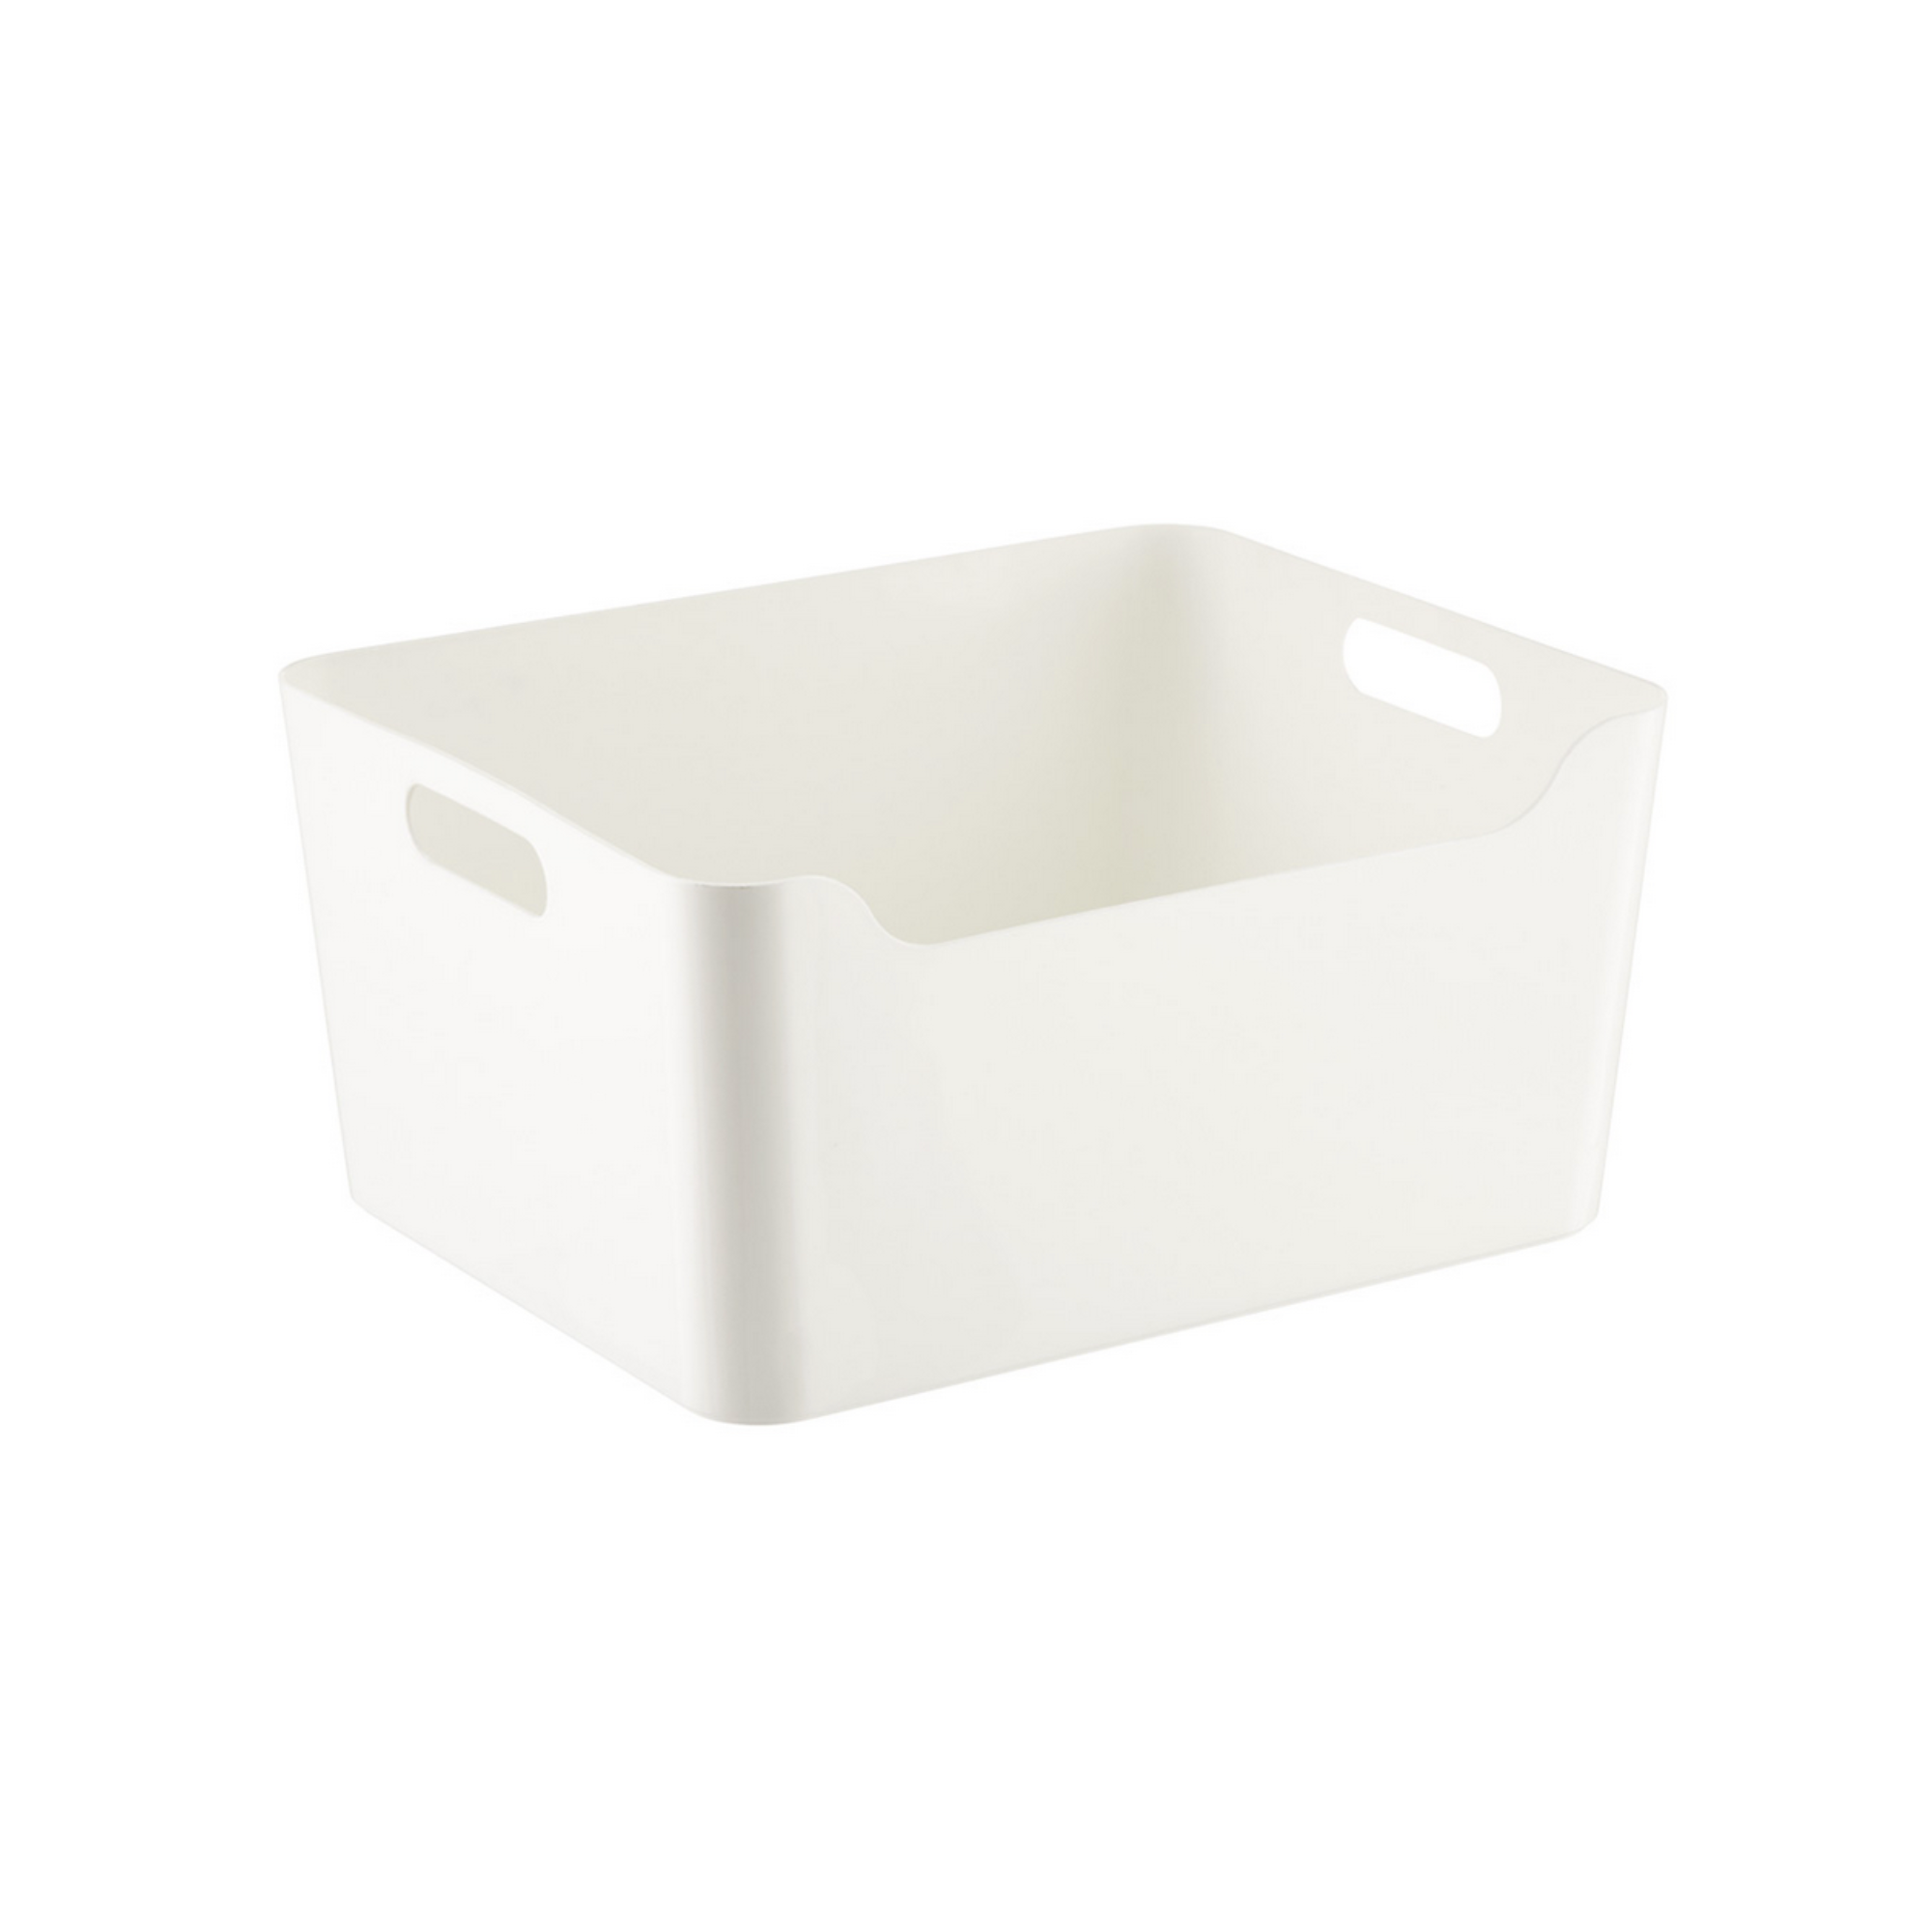 Small White Handled Storage Basket